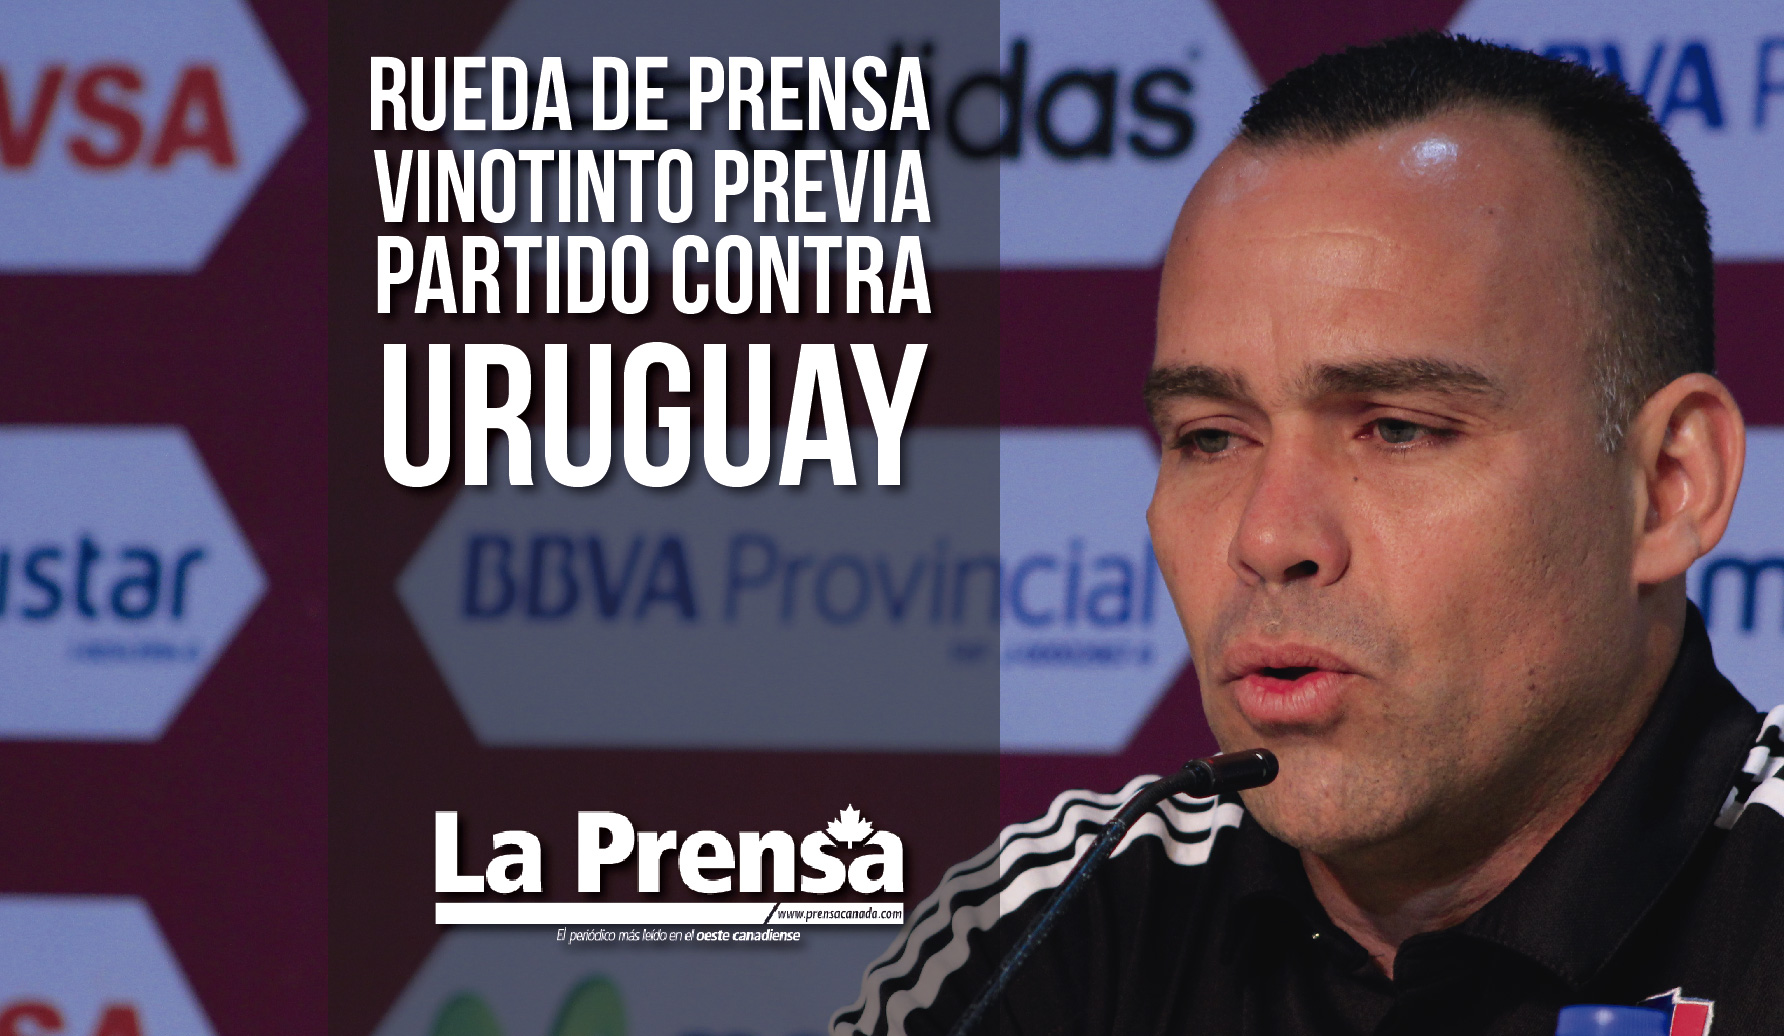 Rueda de prensa Vinotinto previa partido contra Uruguay